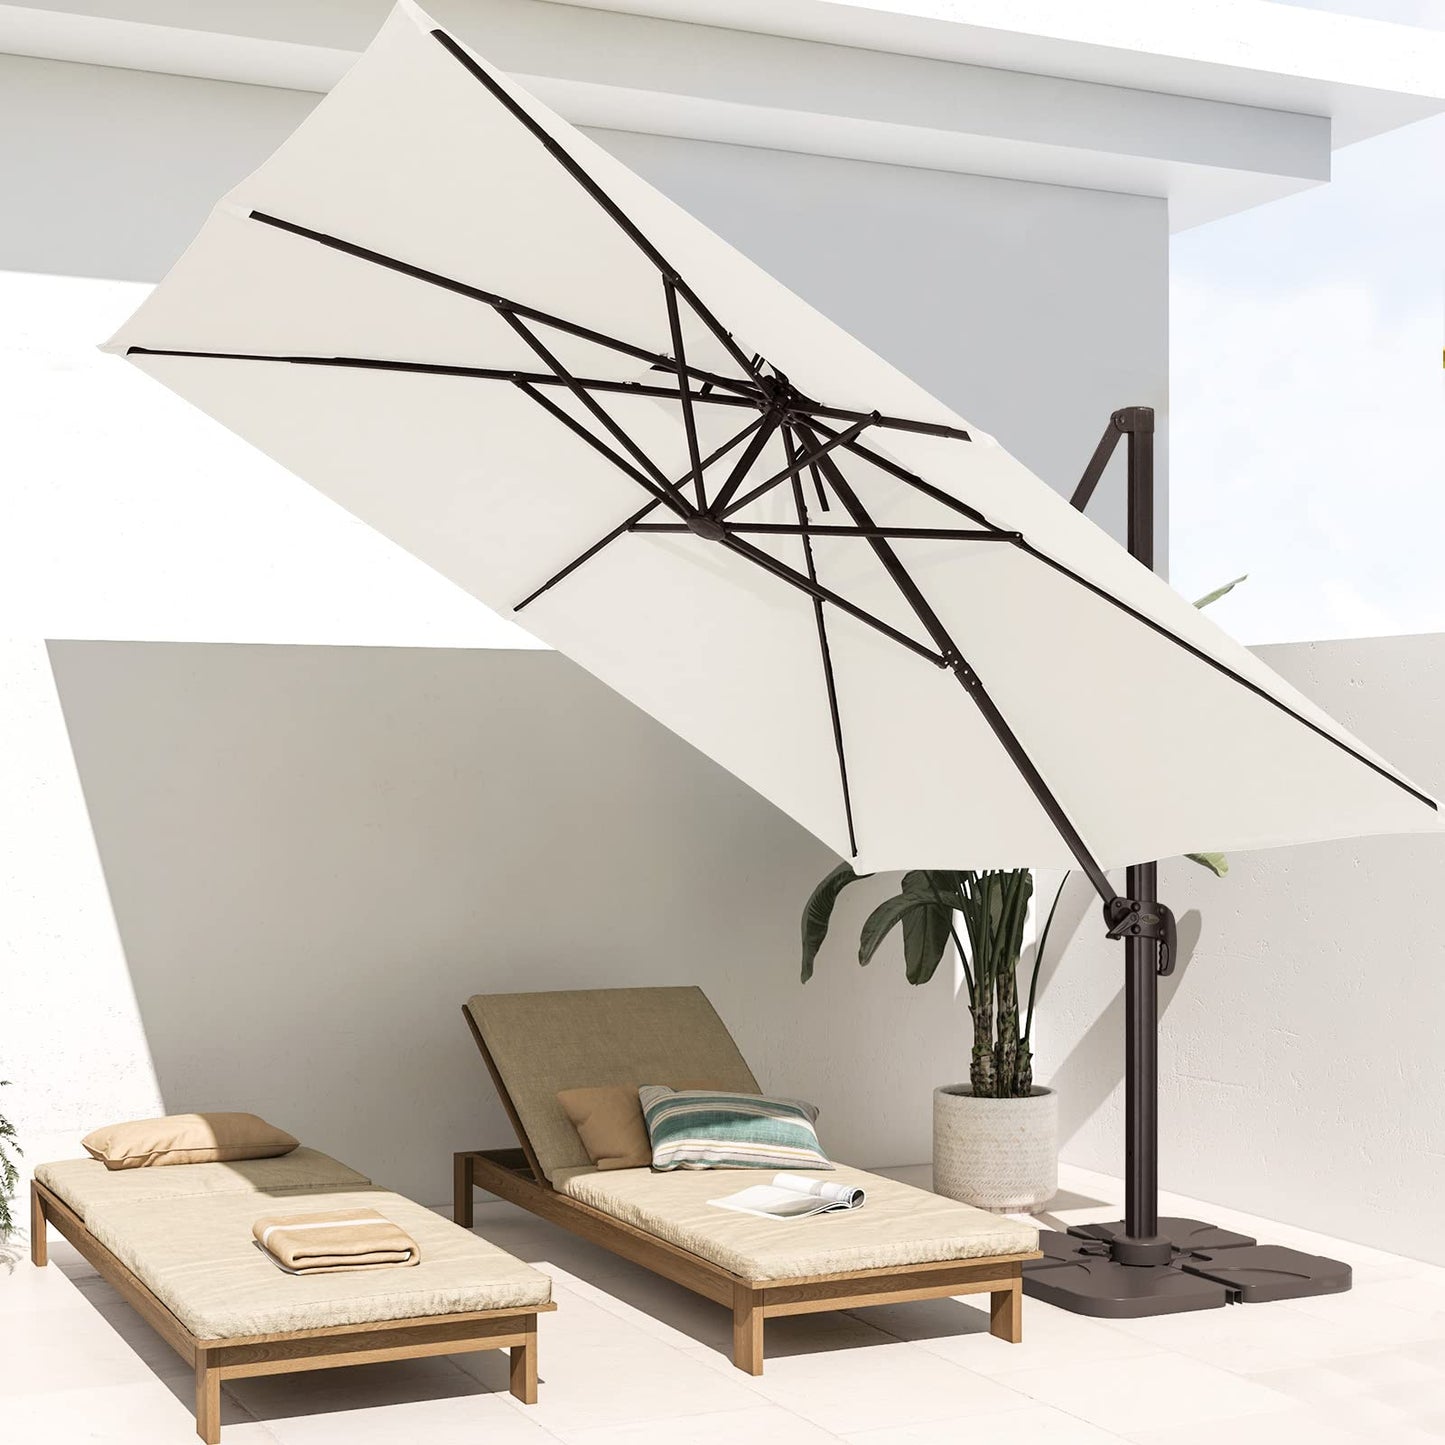 Square Cantilever Patio Umbrella 12FT Cream White